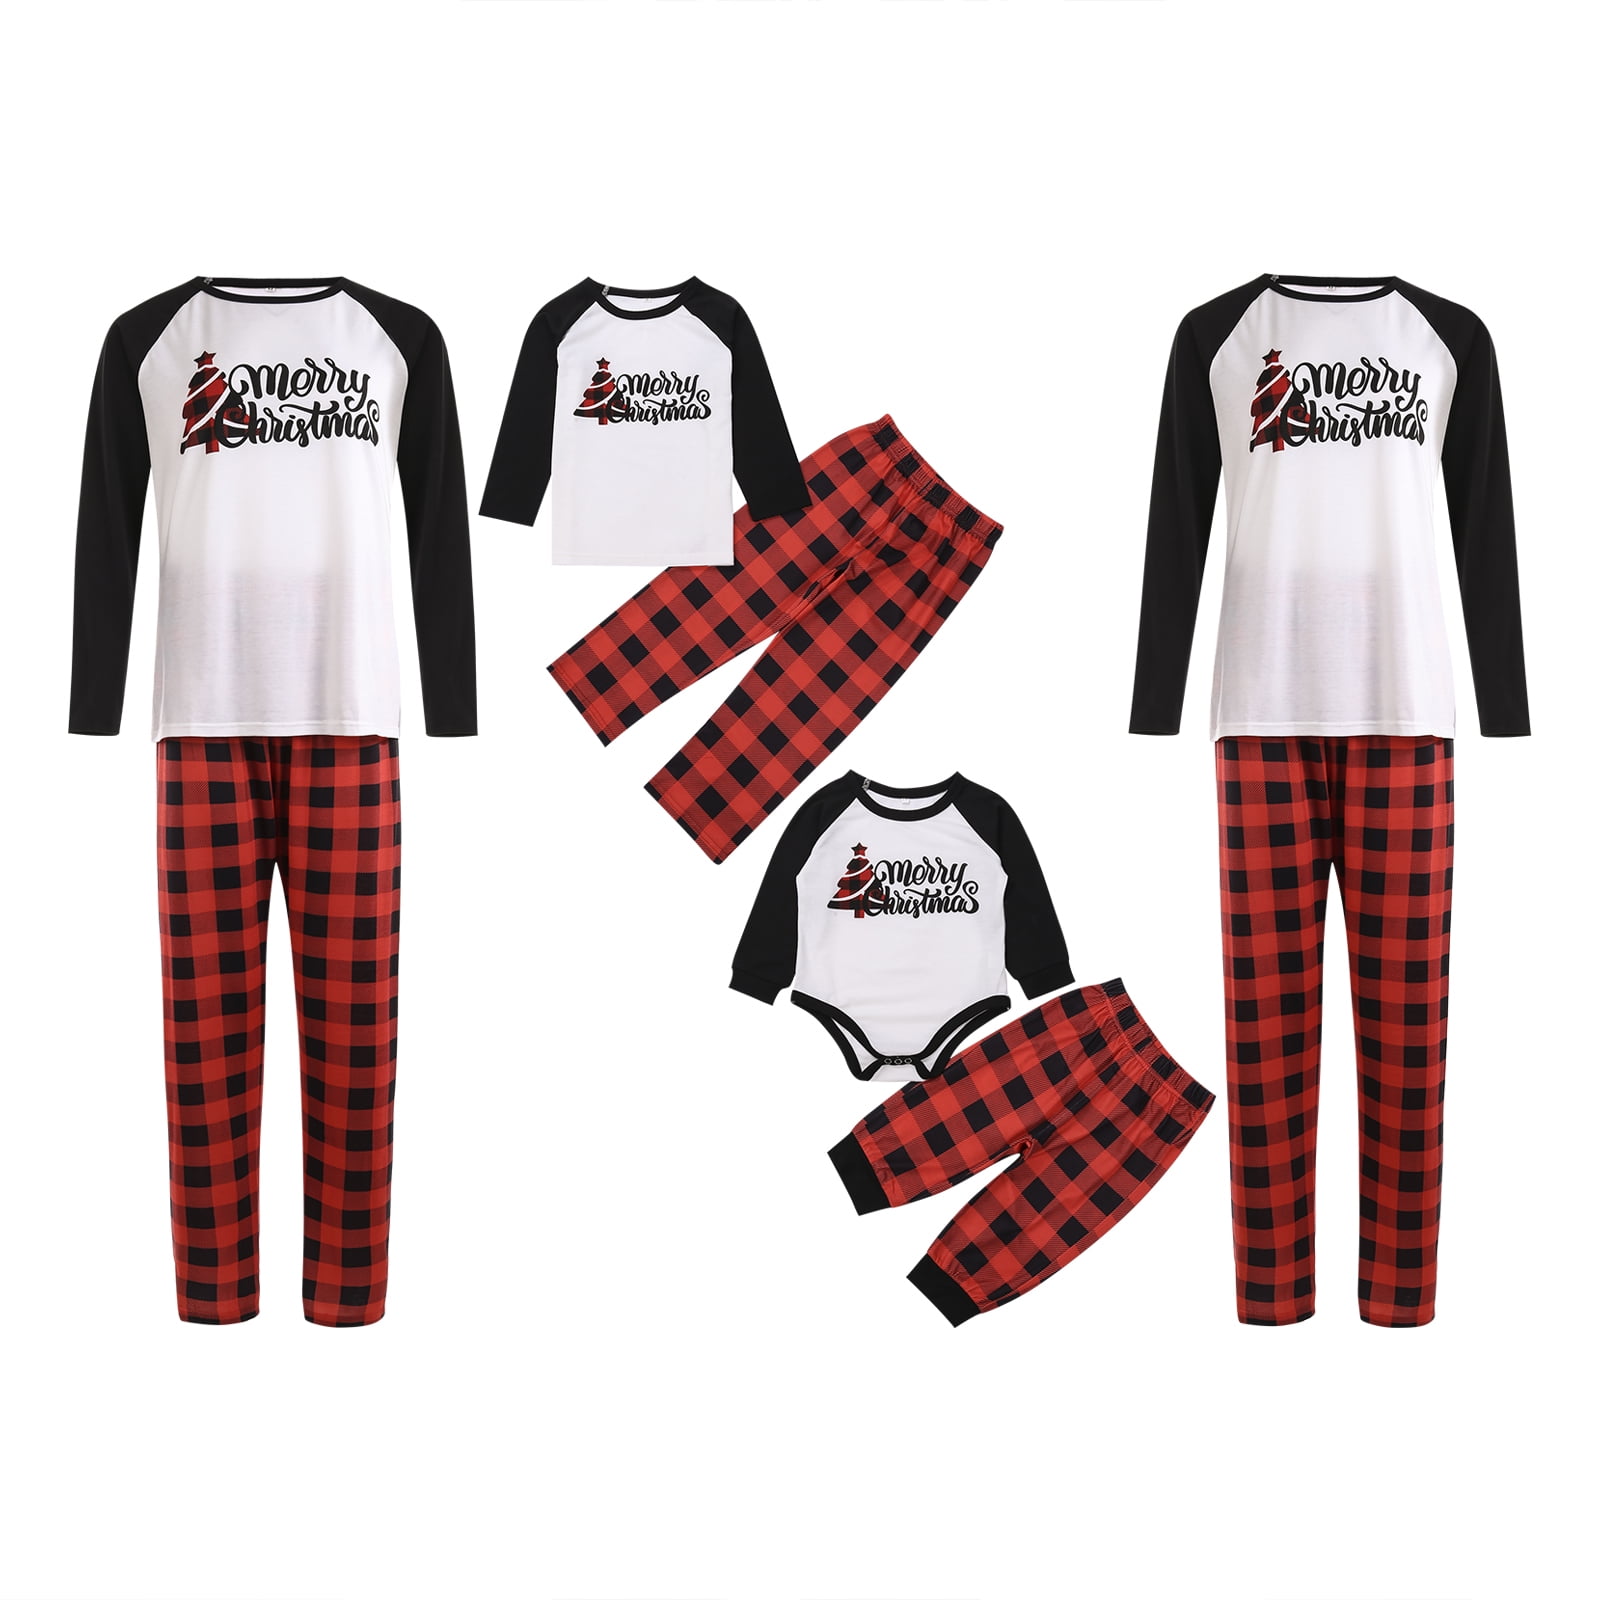 2Pcs Family Matching Christmas Outfits Long Sleeve T-Shirt Romper+Plaid Long Pants Pajamas Merry Christmas Sleepwear Sleepsuit 